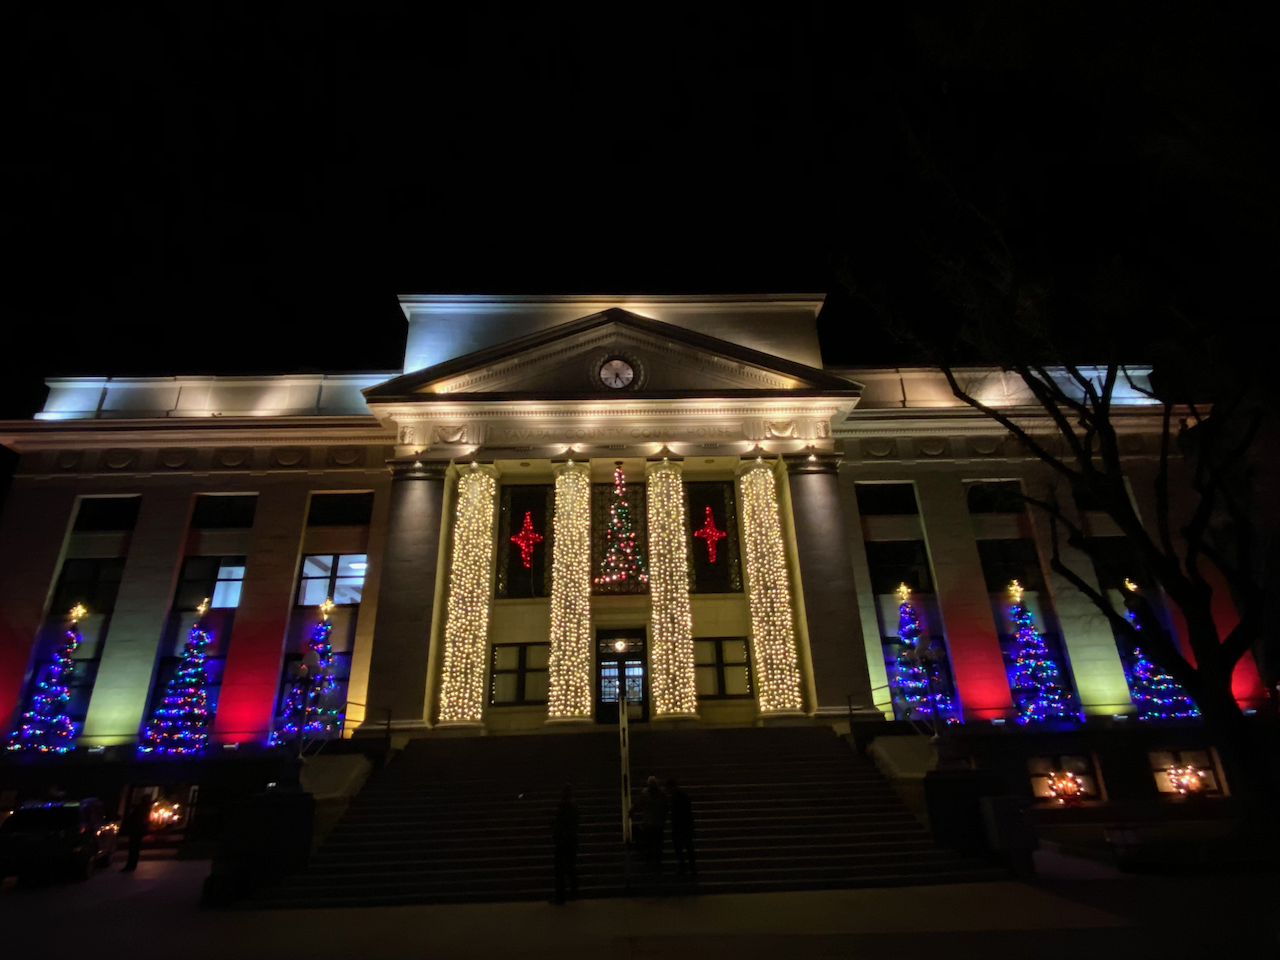 Prescott Courthouse Christmas Lights